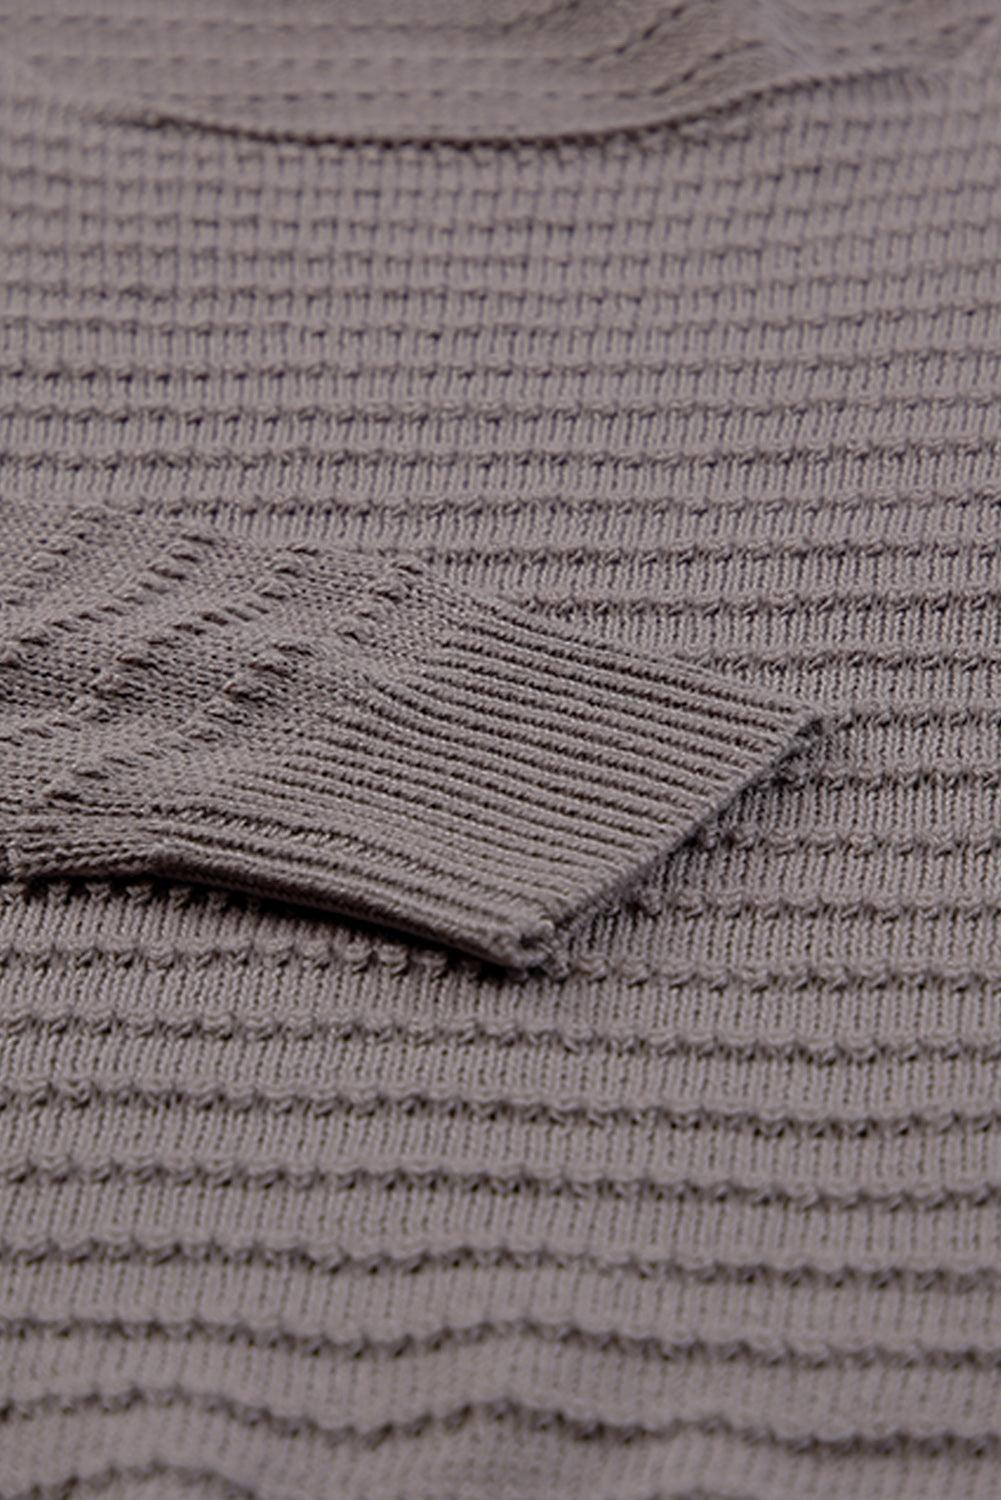 Gray Textured Knit Round Neck Dolman Sleeve Sweater - L & M Kee, LLC